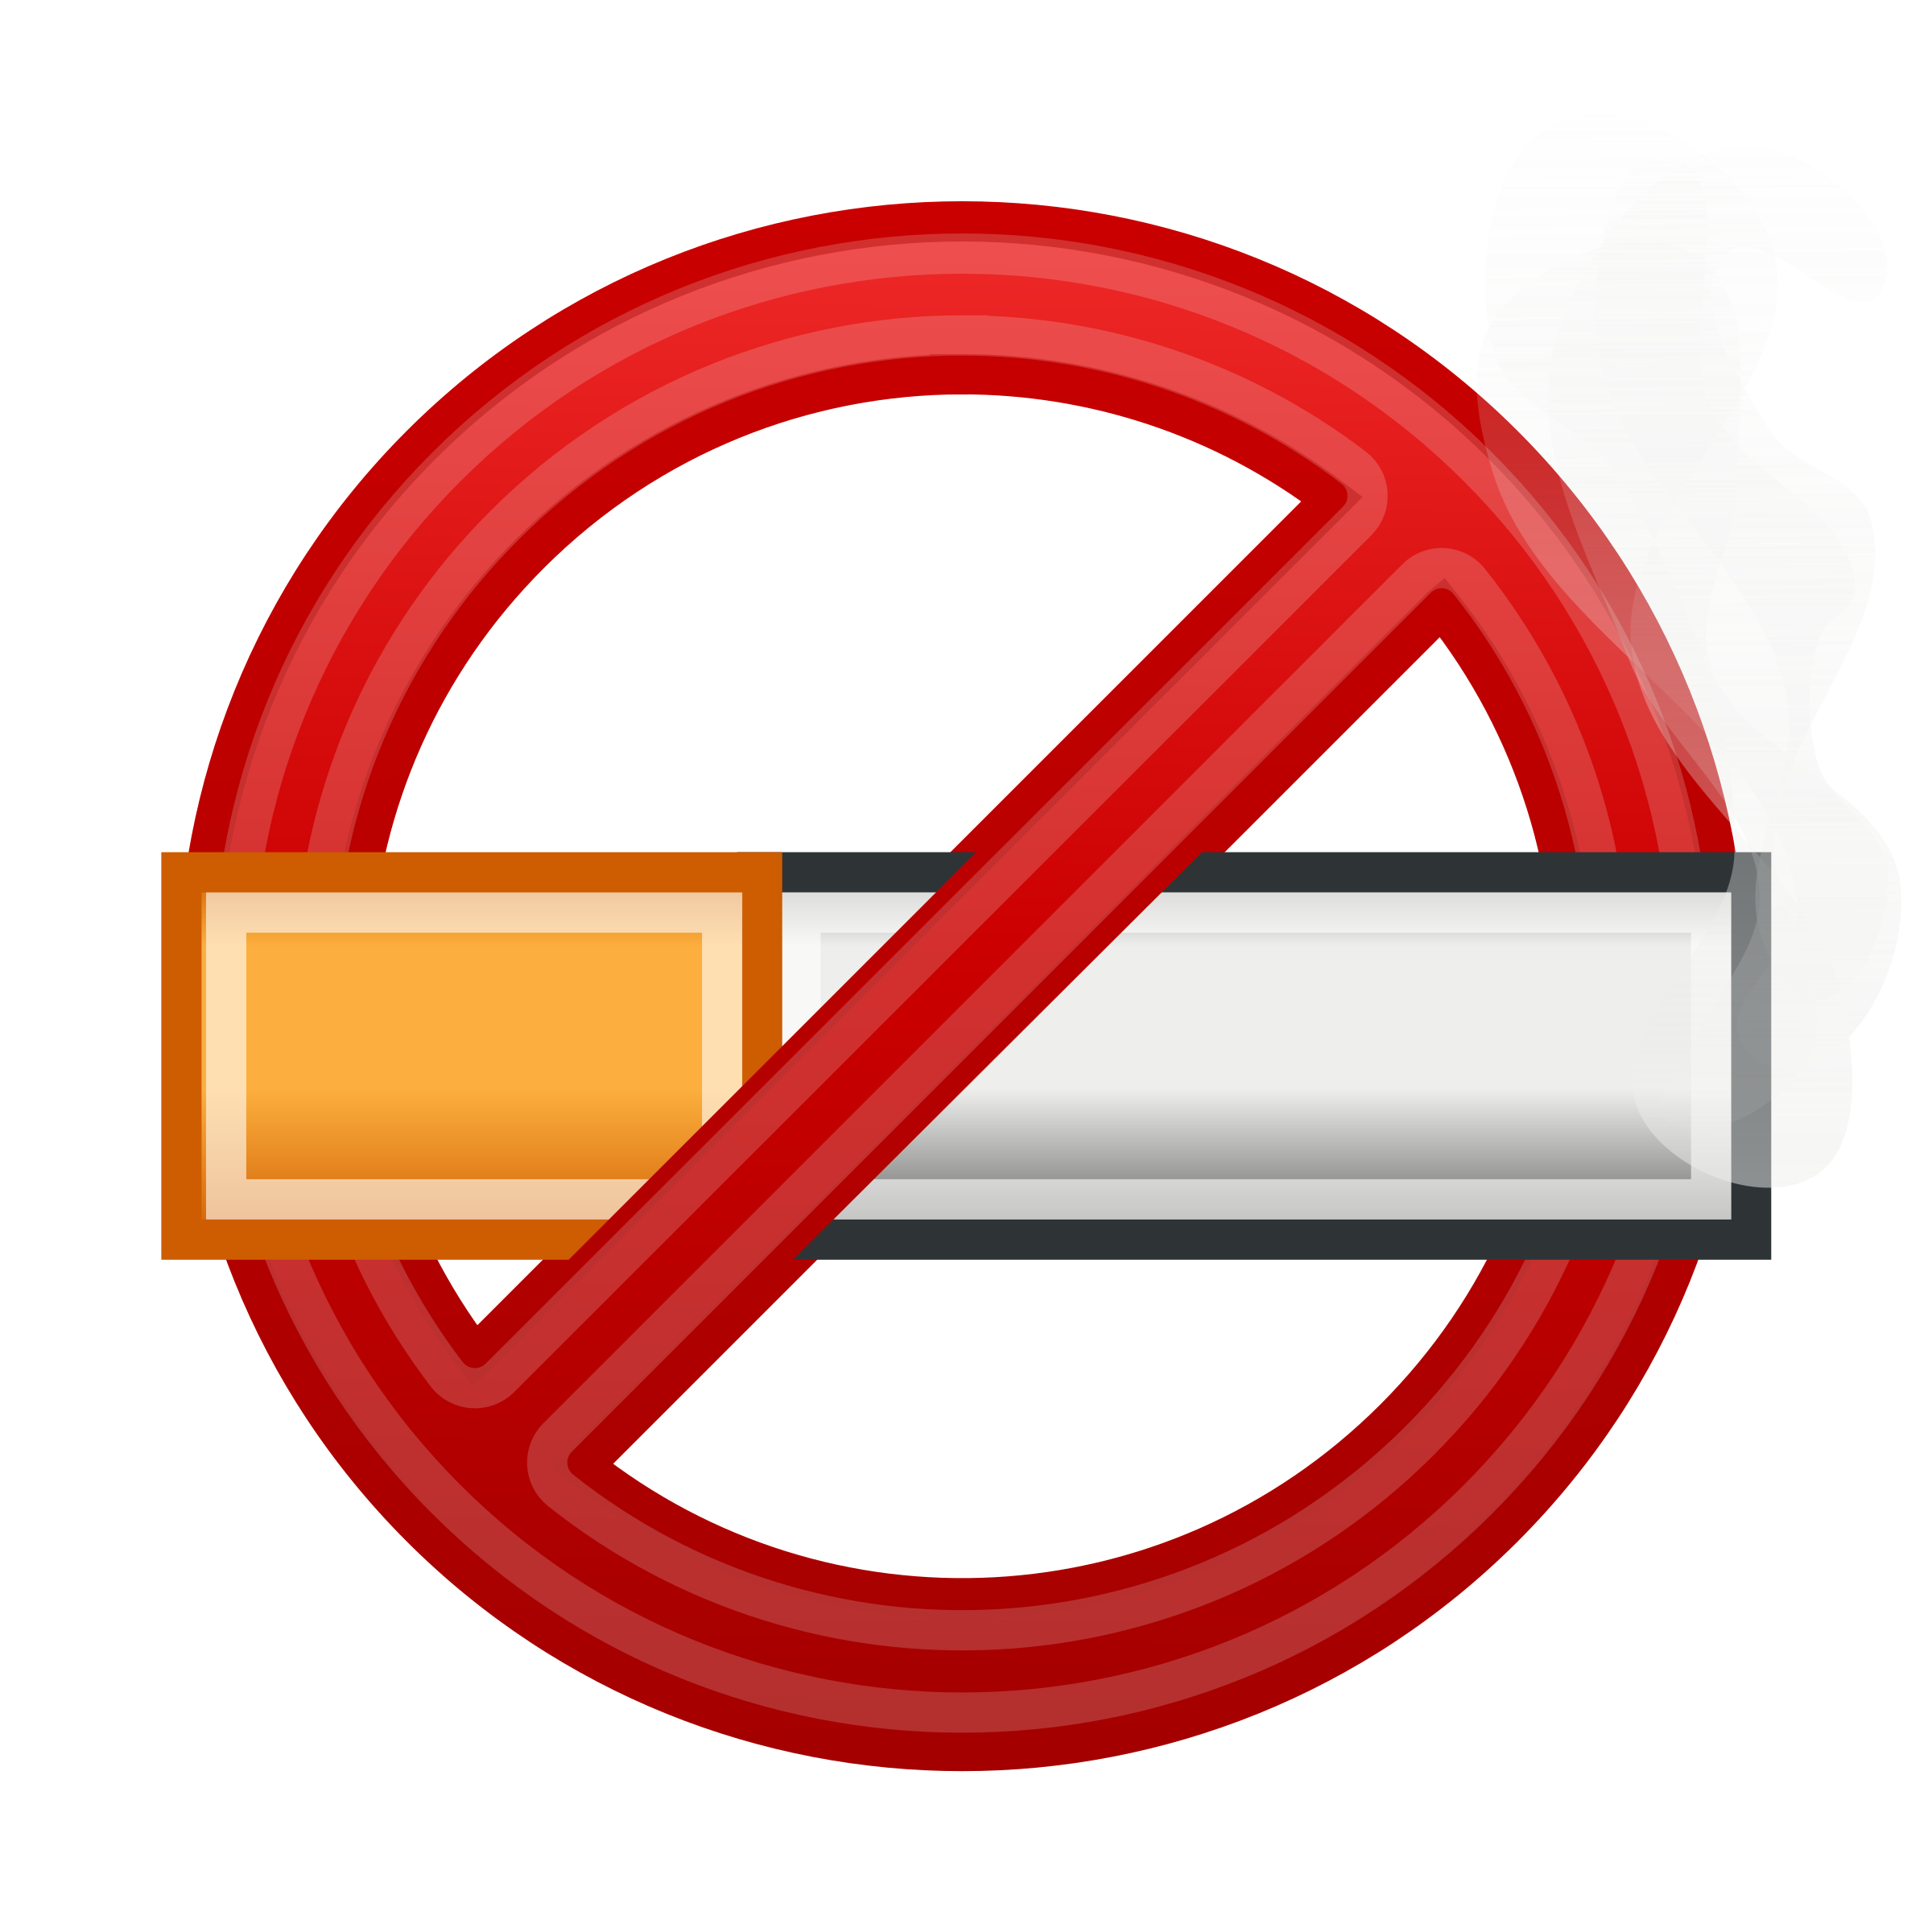 cigarette clipart anti smoking